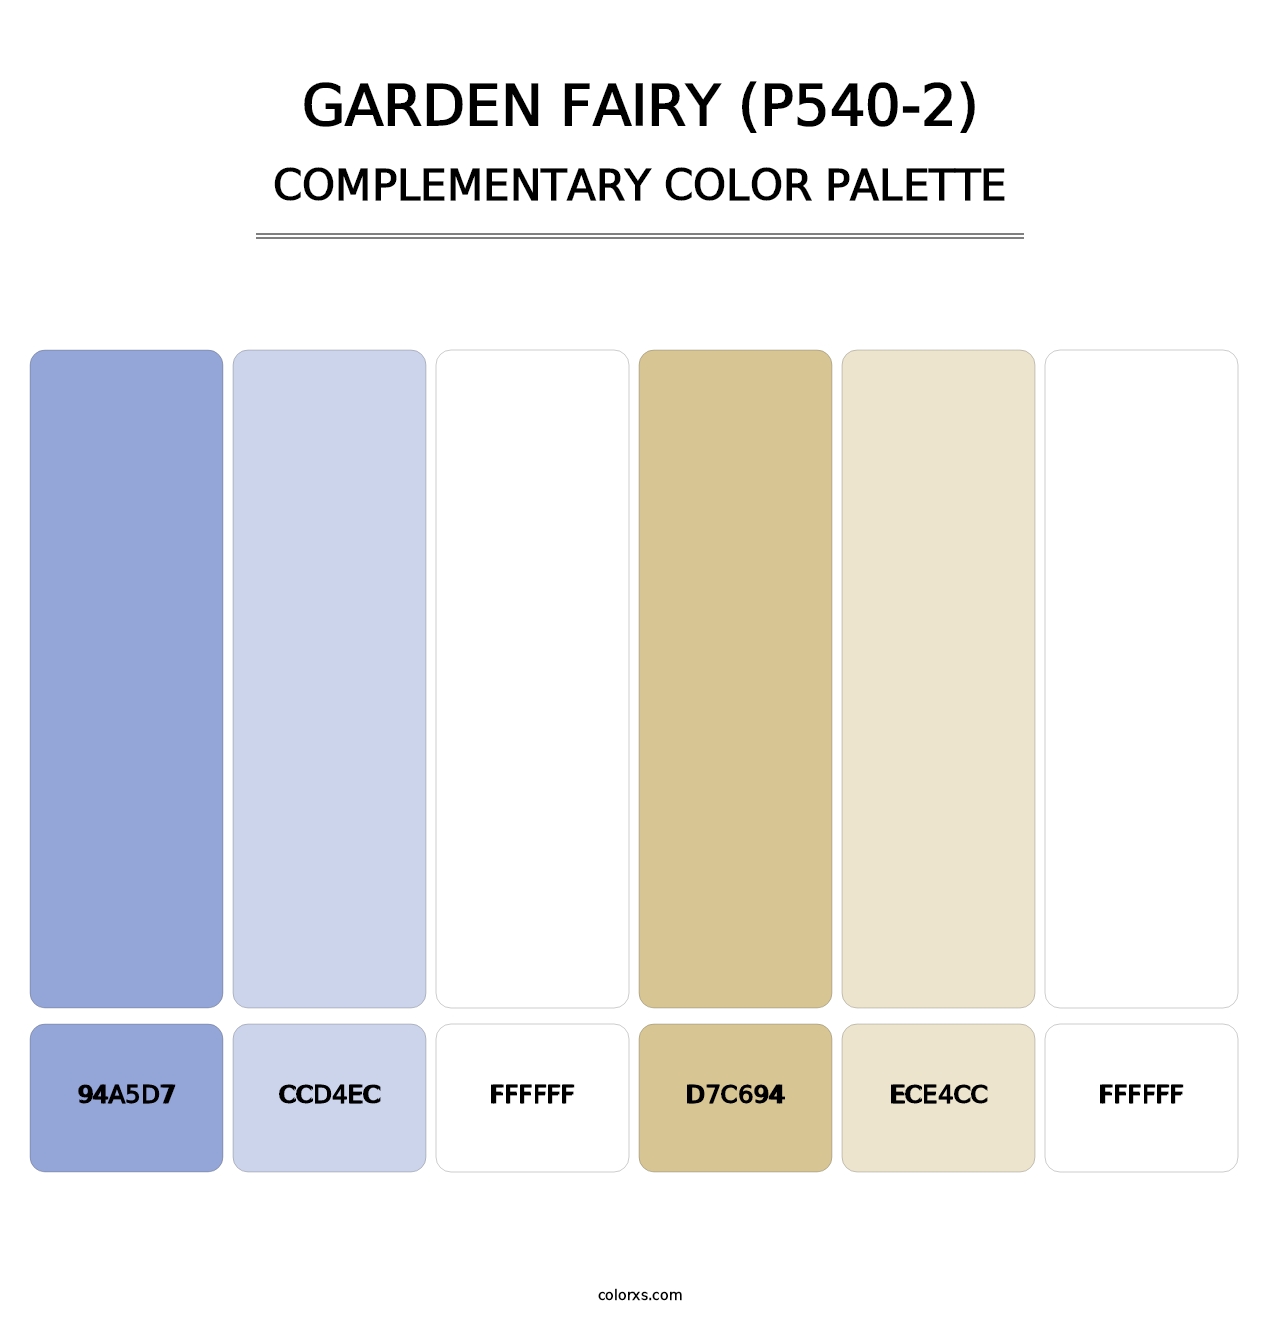 Garden Fairy (P540-2) - Complementary Color Palette